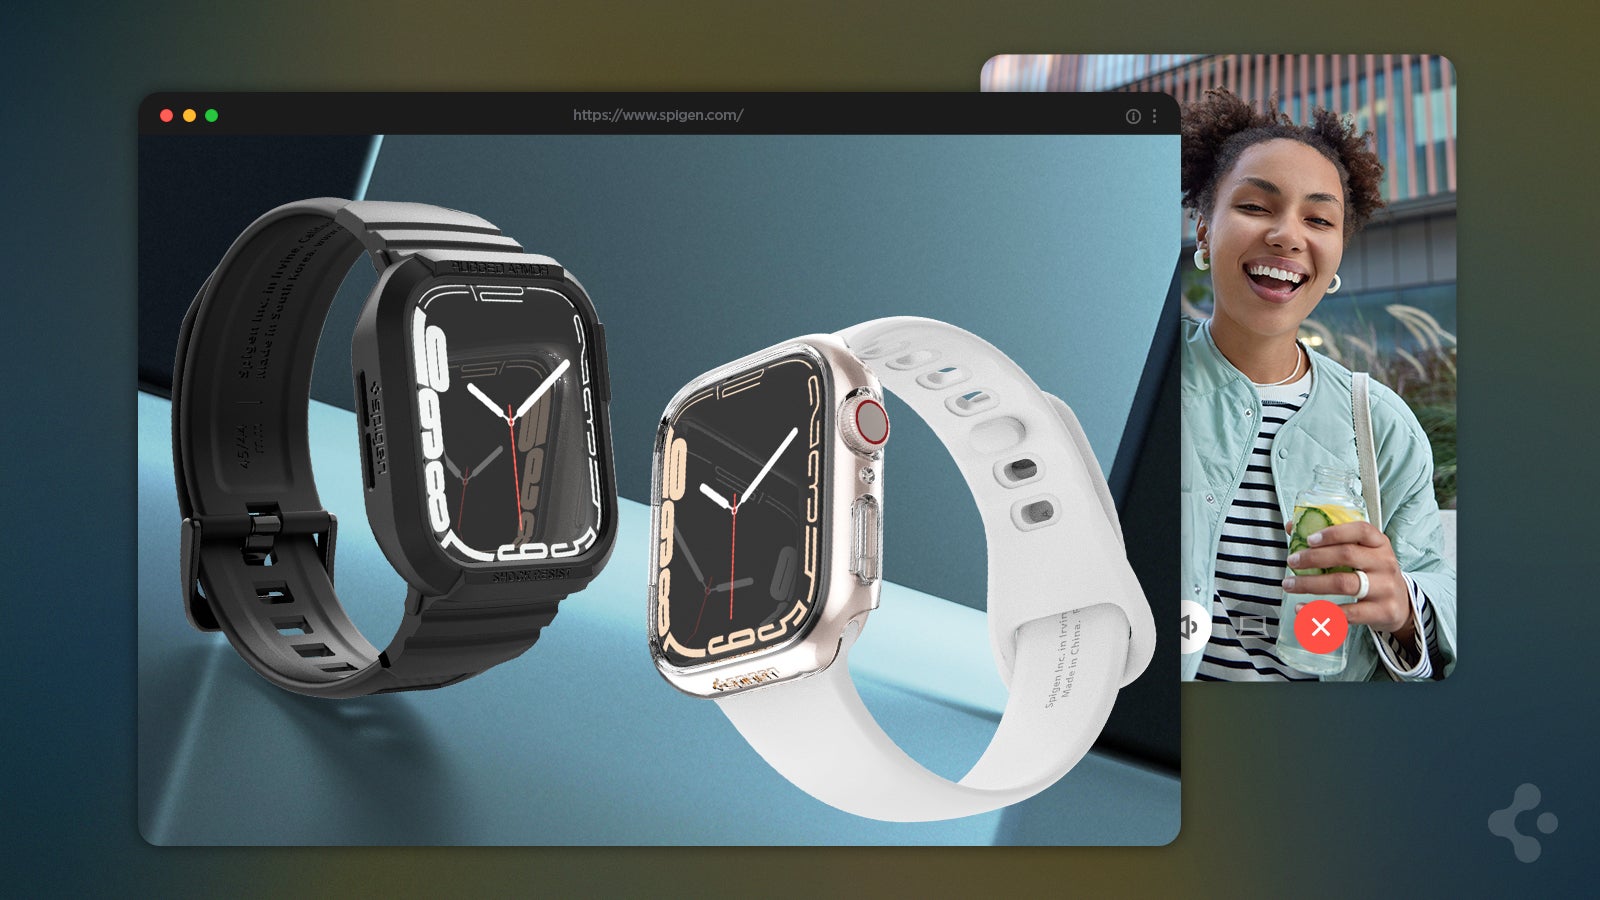 (Sumber - Spigen) Aksesori Apple Watch - Aksesori terbaik untuk Apple Life Anda: Casing, dudukan, dan baterai Spigen